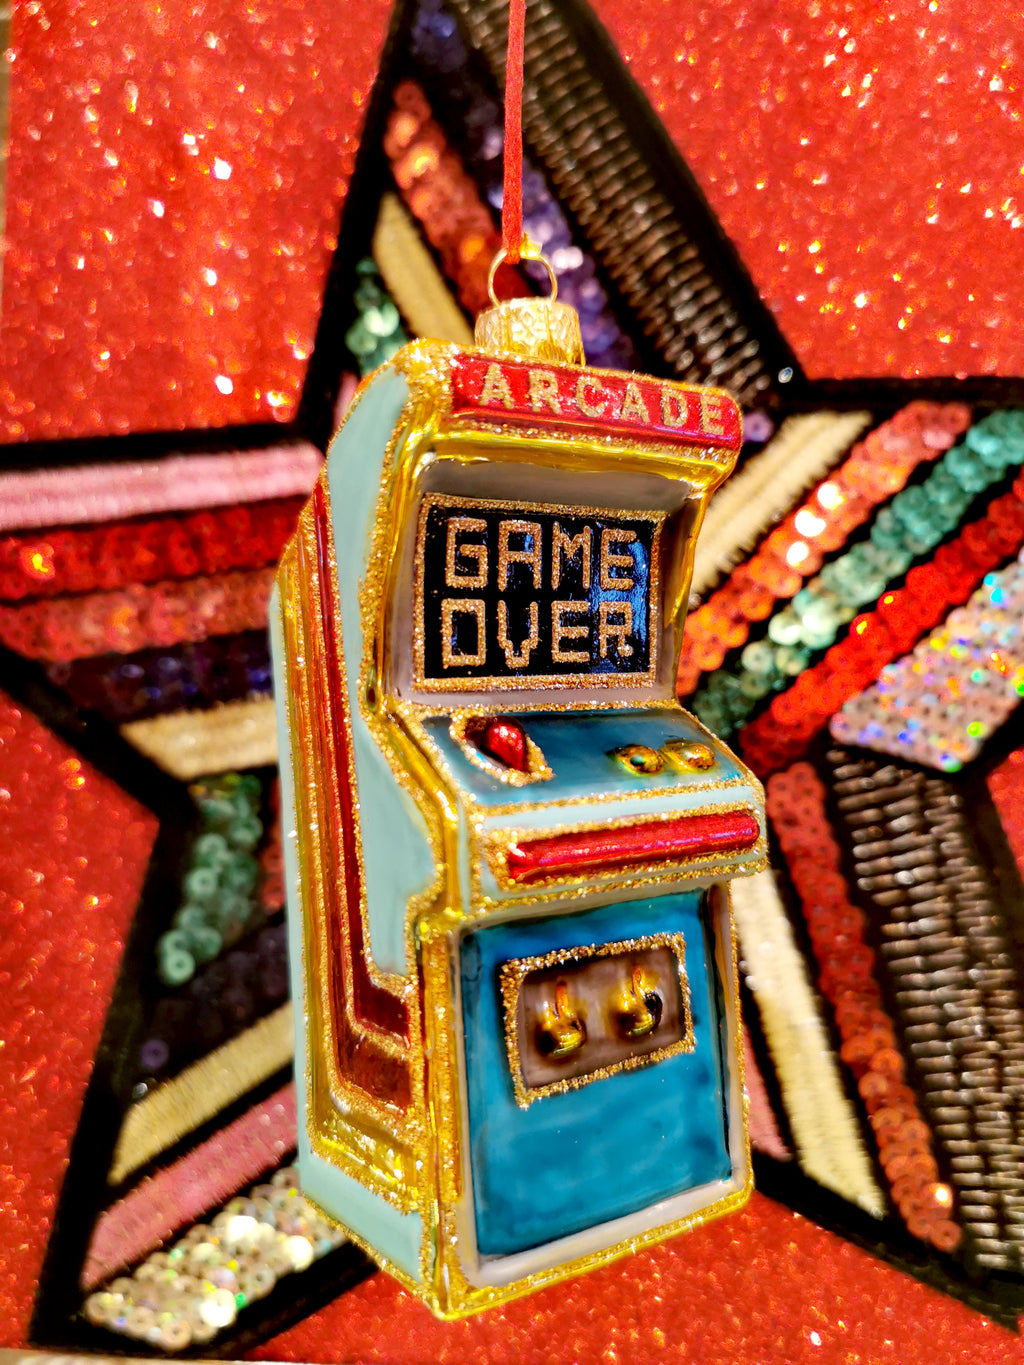 Super glitter rainbow arcade game as a glass bauble-genius!!

11cm x 5cm x 4cm

